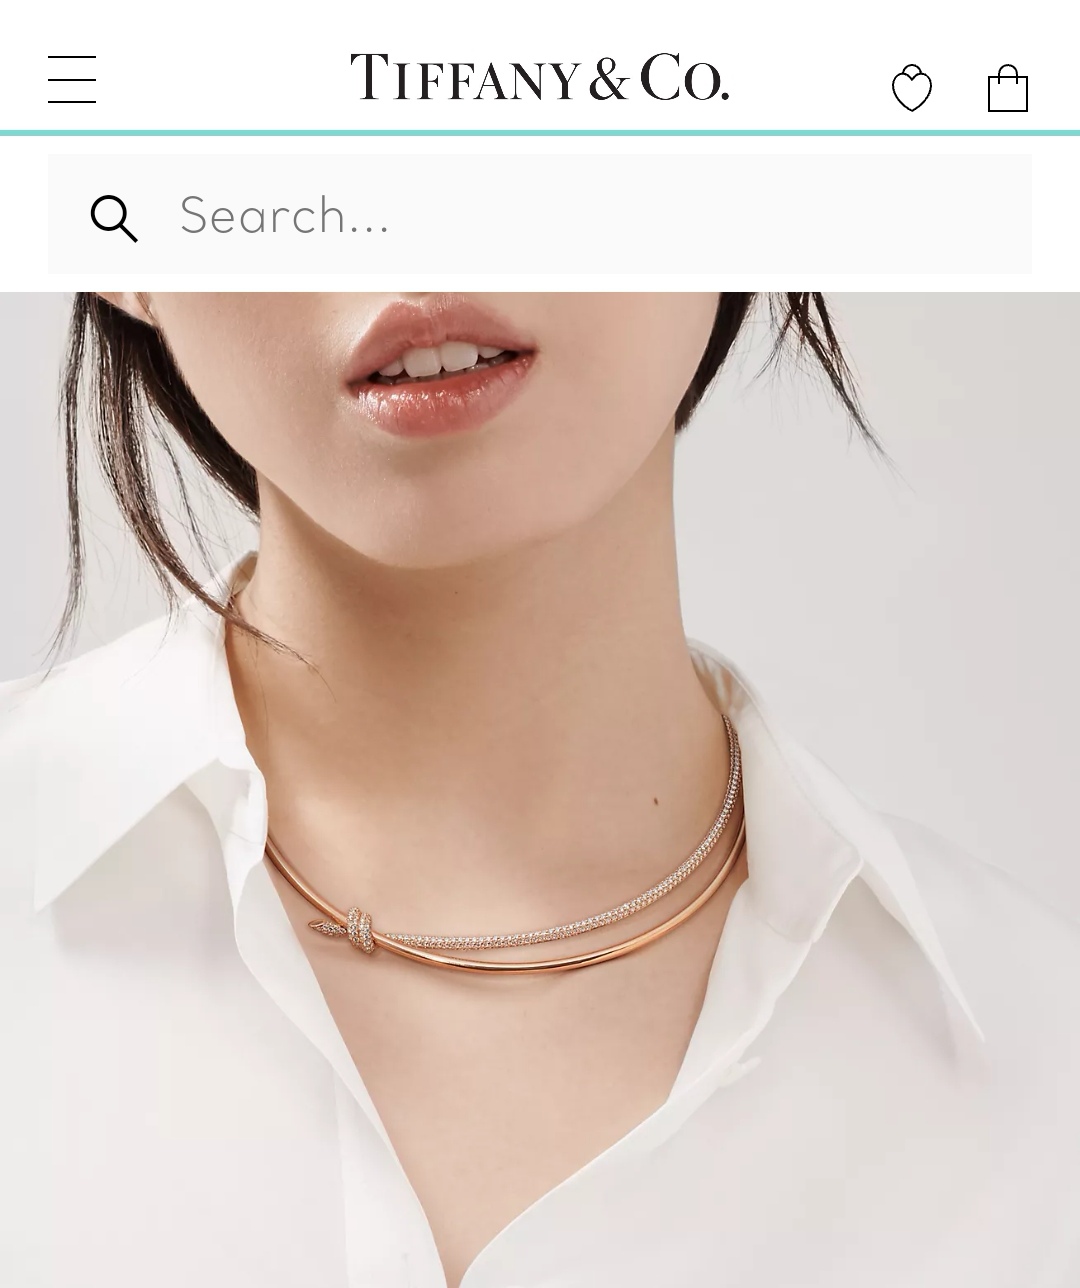 Tiffany & co necklace